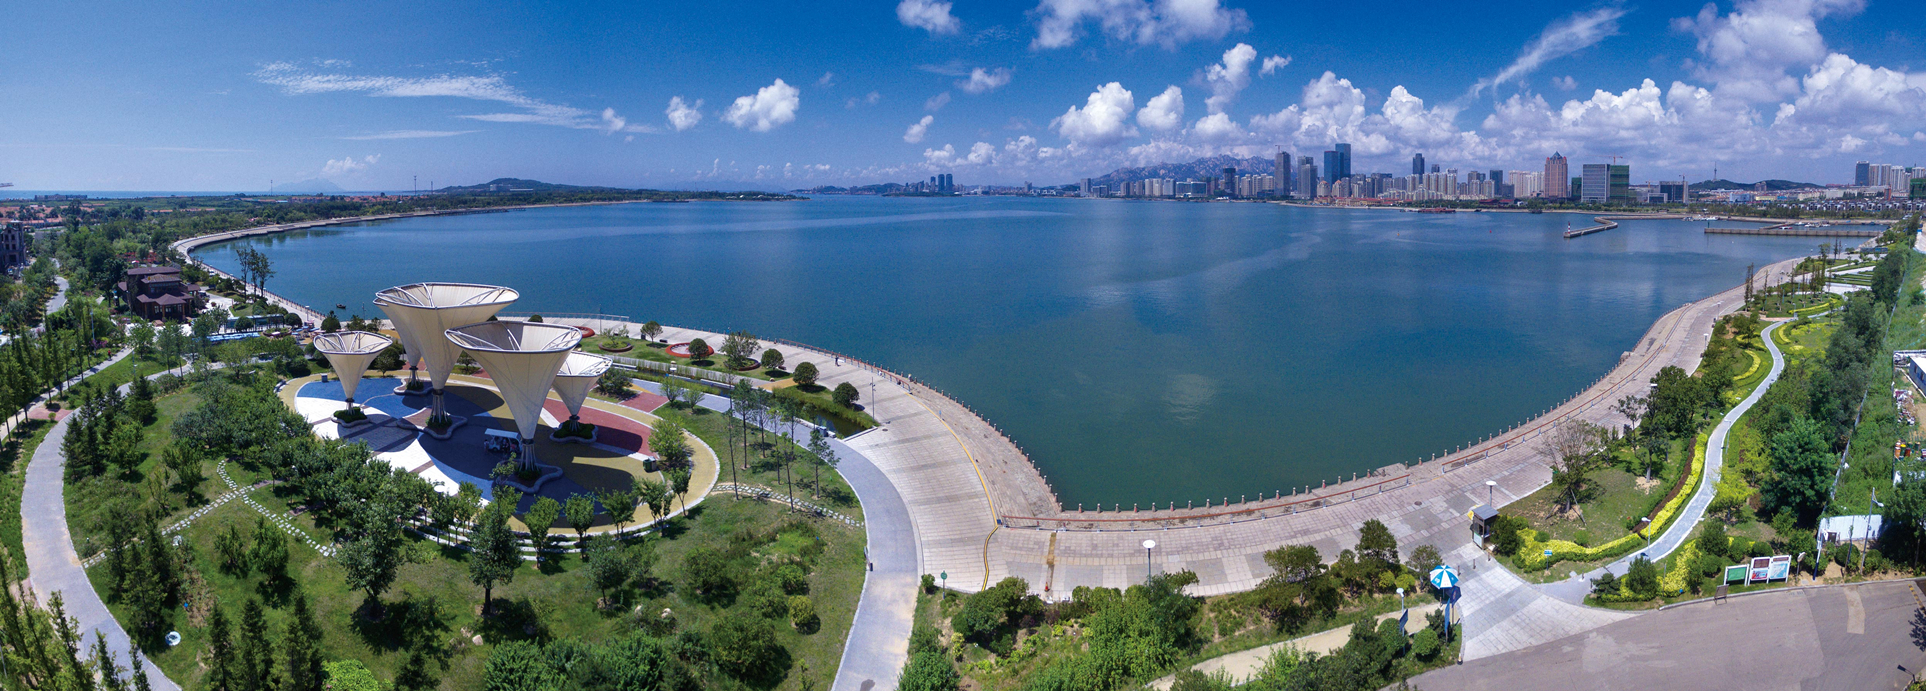 Qingdao West Coast New Area: A new model for urban construction